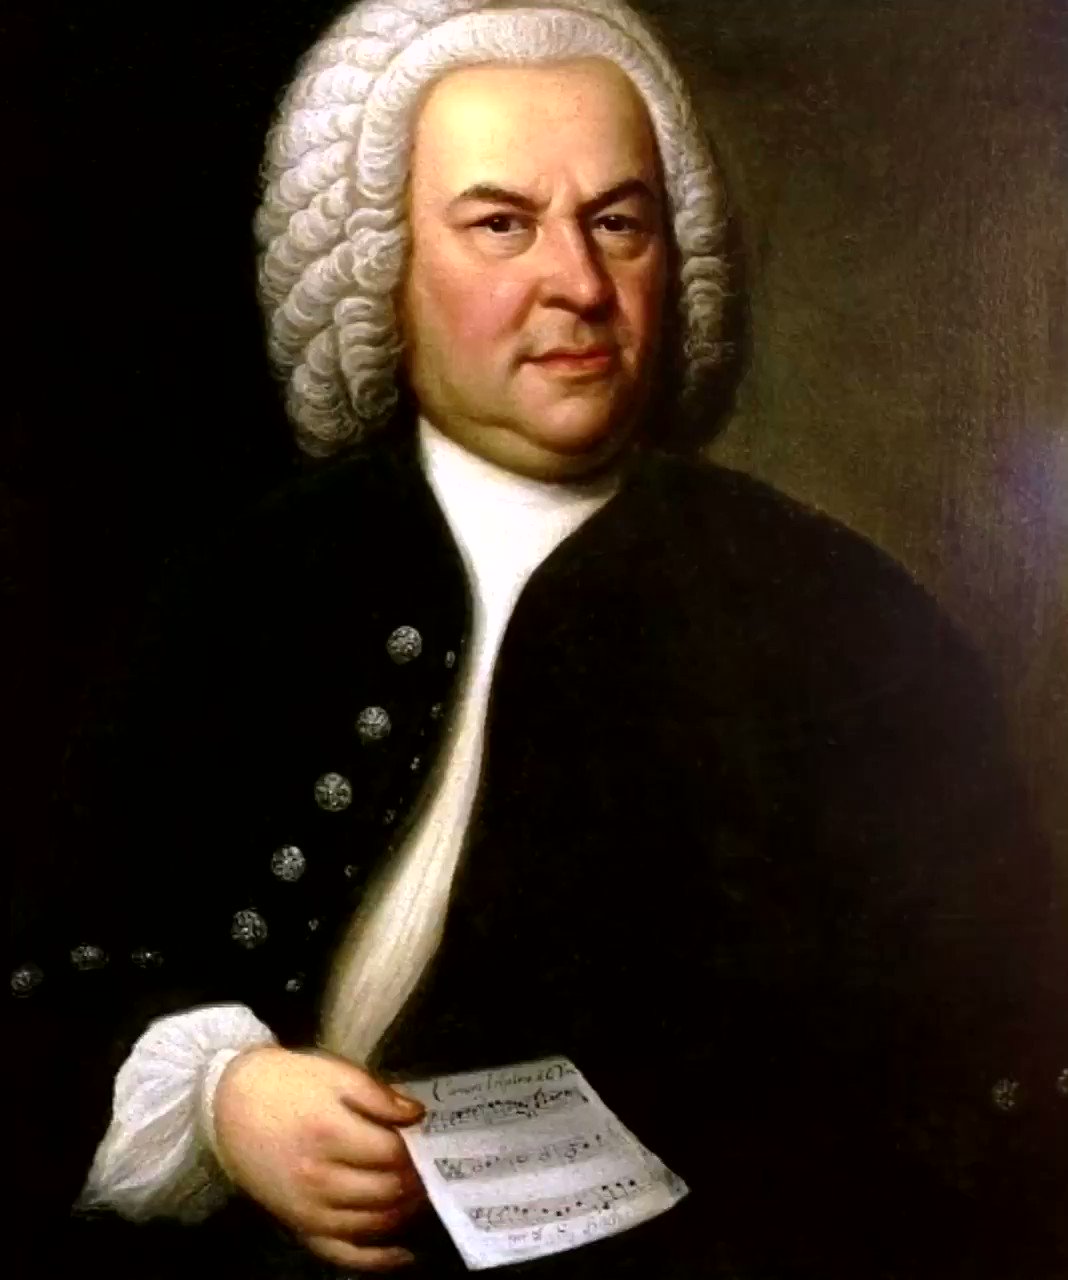 Happy birthday, Johann Sebastian Bach - born on this day in 1685! 